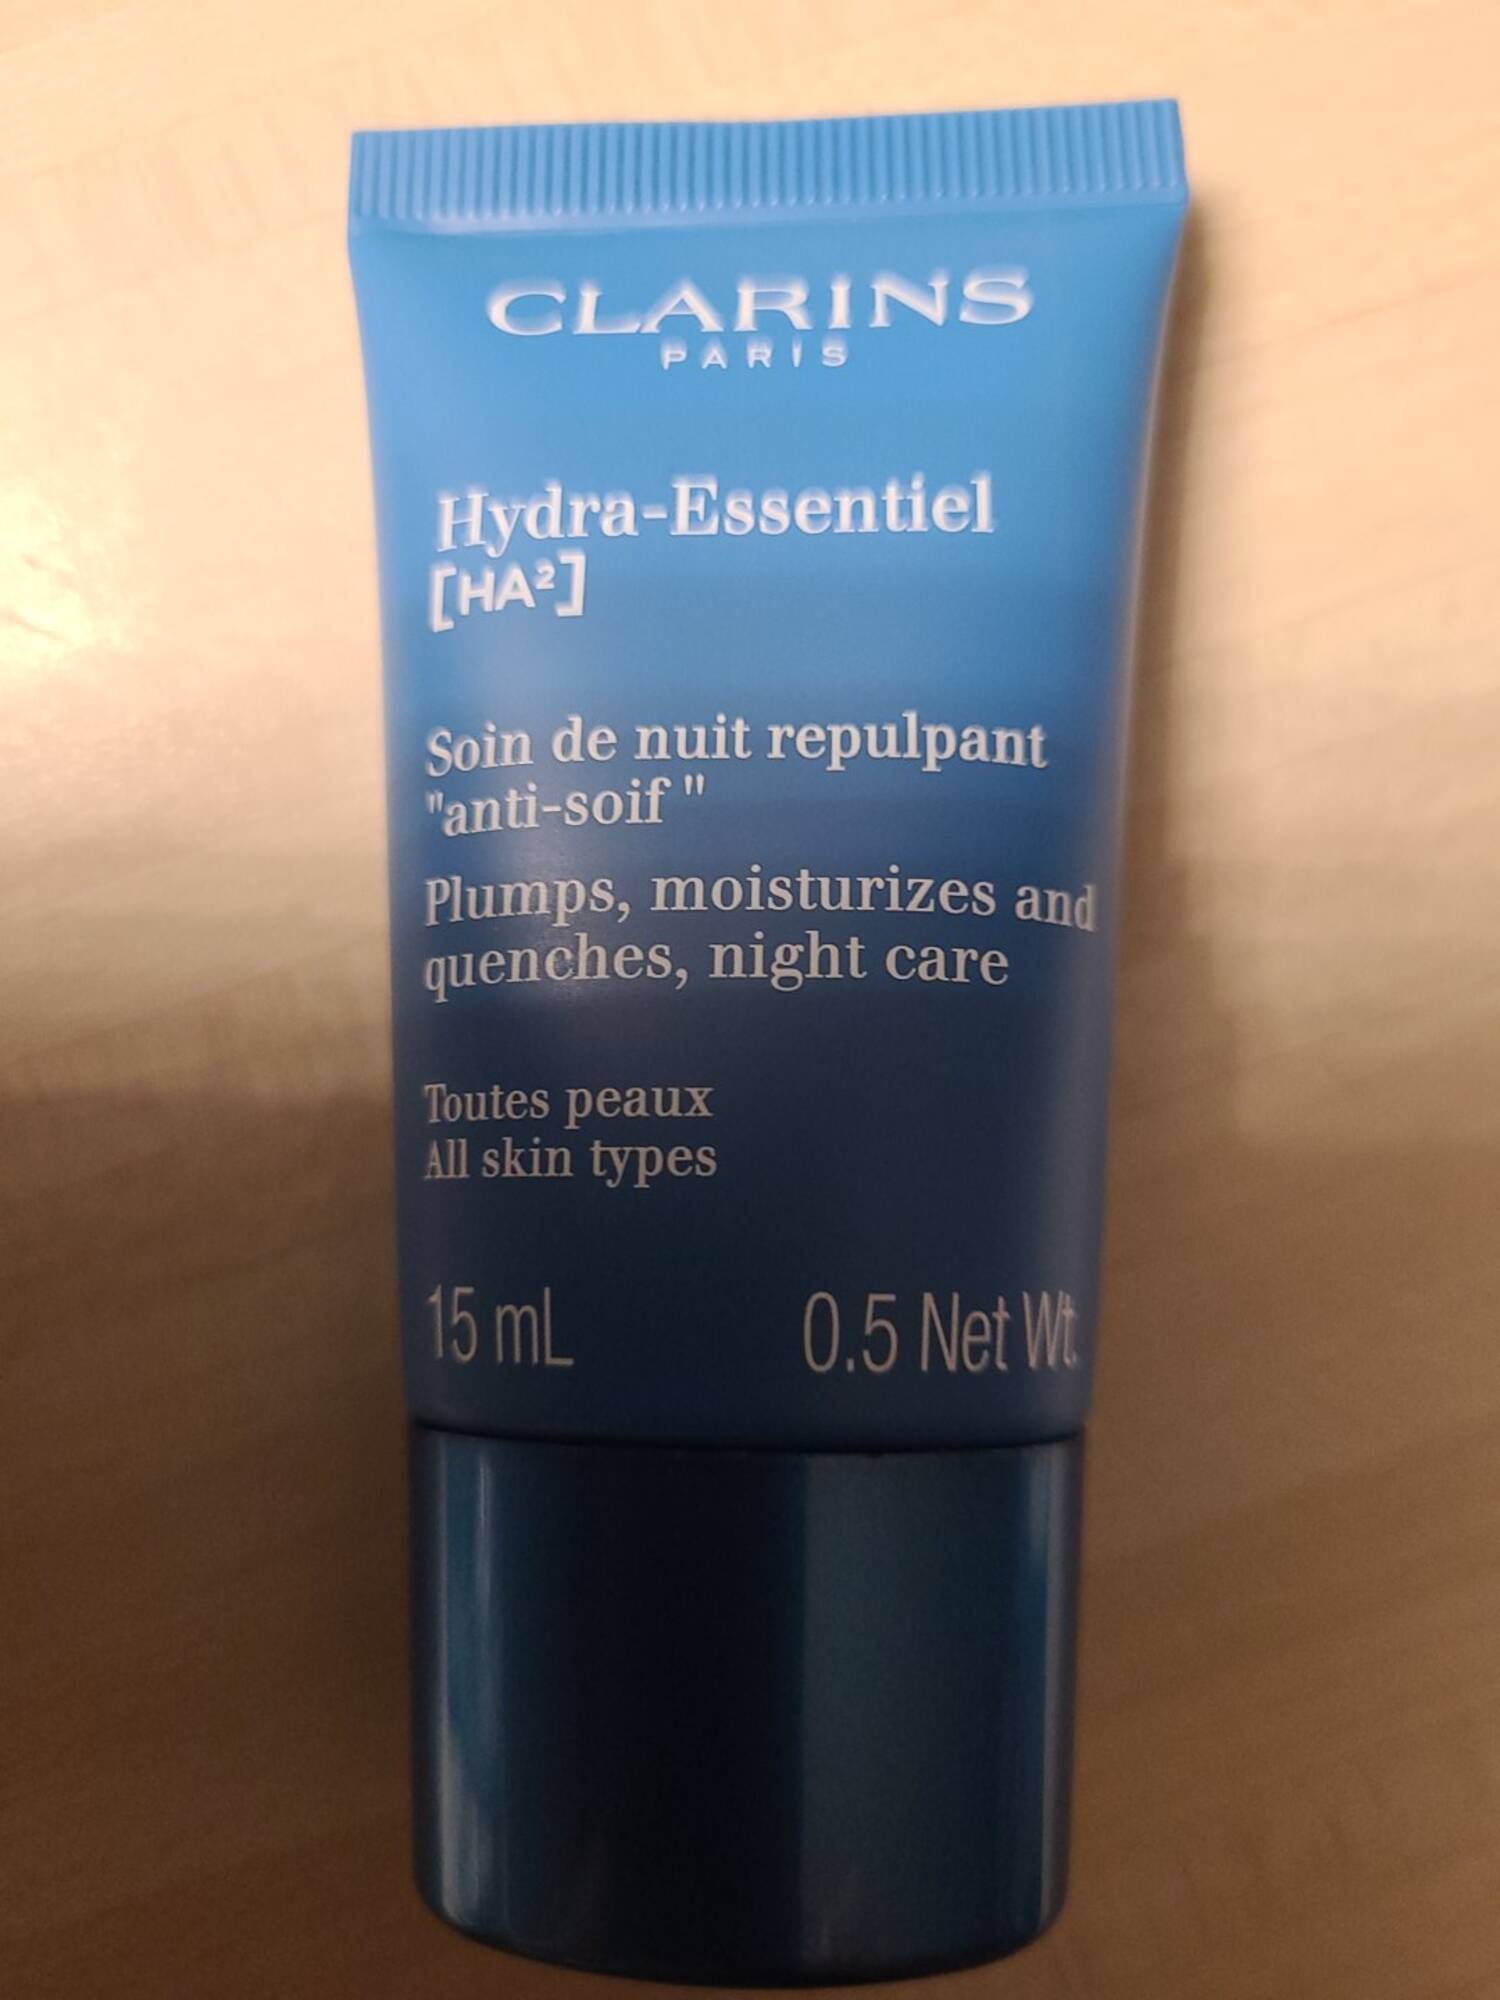 CLARINS - Hydra essentiel [HA2] - Soin de nuit repulpant